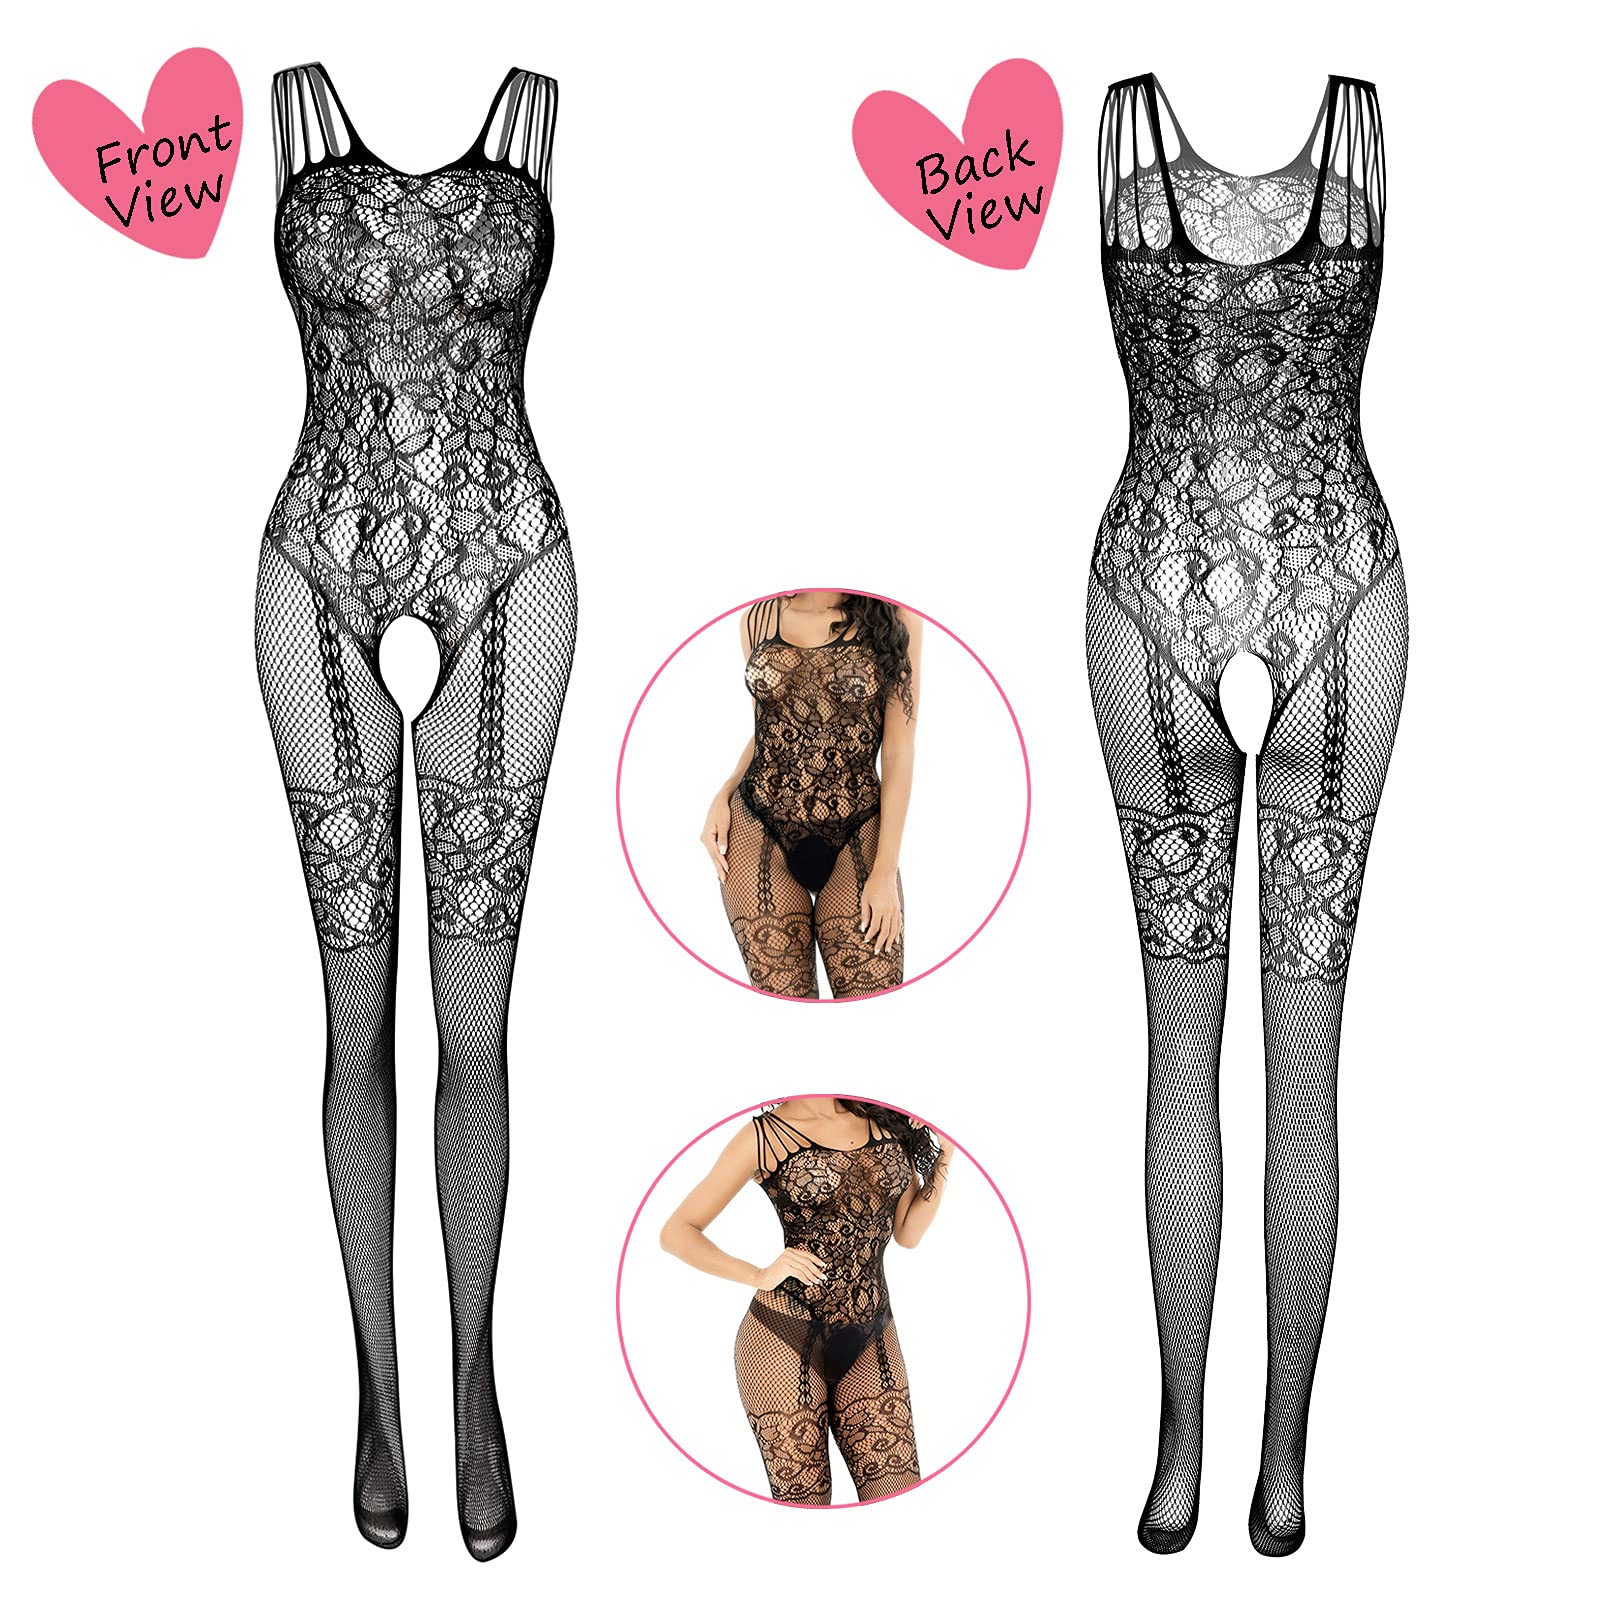 Women's Lace Stockings Lingerie Floral Fishnet Bodysuits Lingerie Nightwear for Romantic Date Wearing